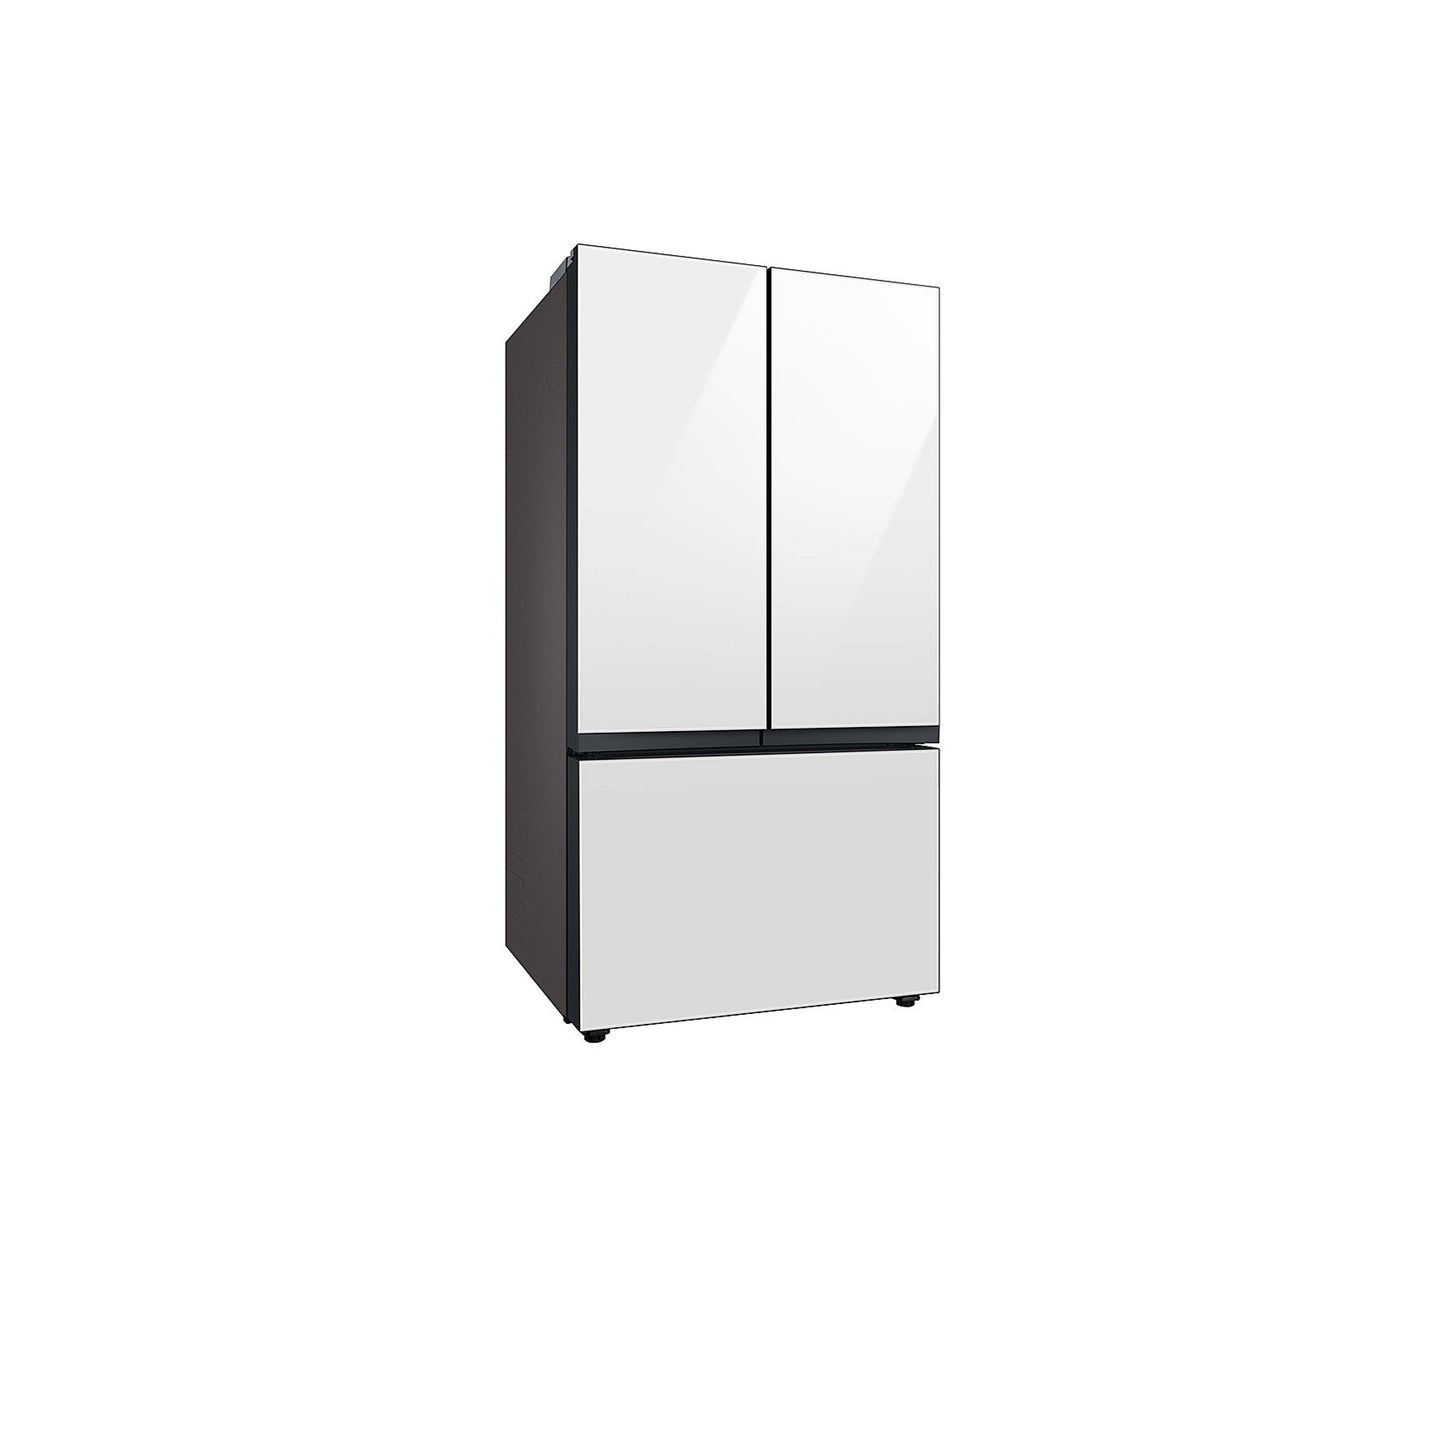 Bespoke 3-Door French Door Refrigerator (24 cu. ft.) with AutoFill Water Pitcher in Stainless Steel.